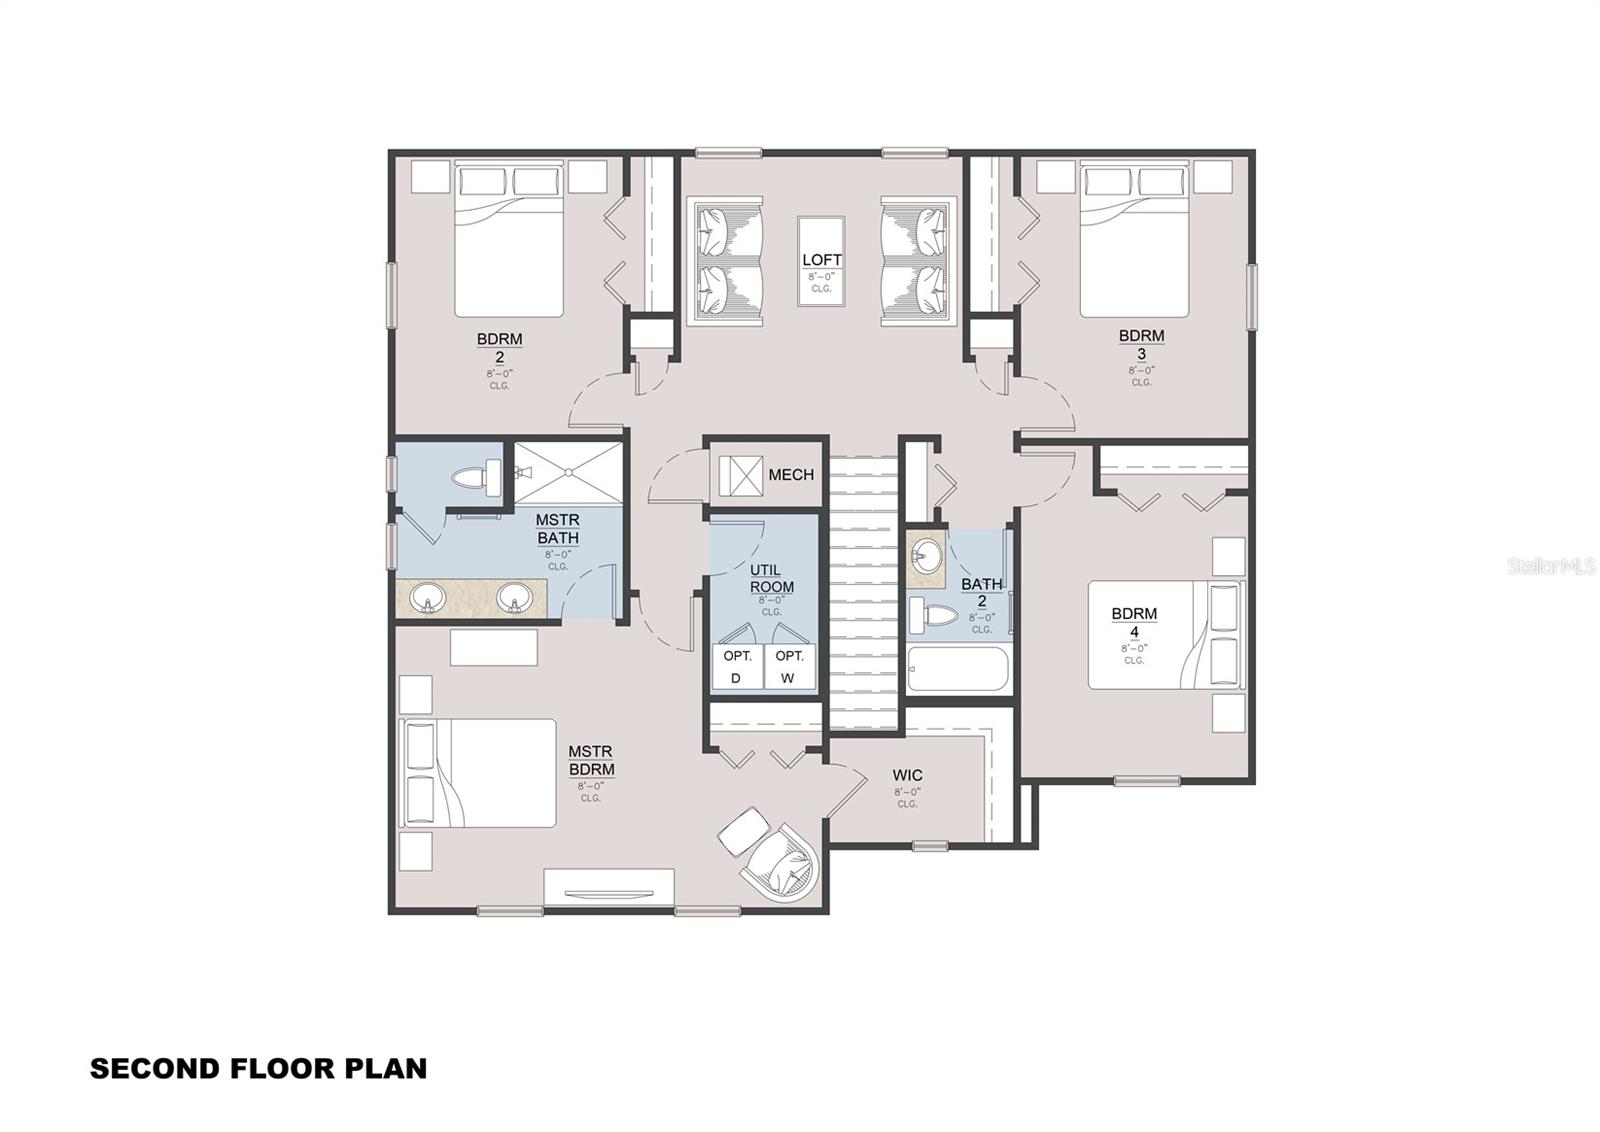 Sample Second Floor Plan